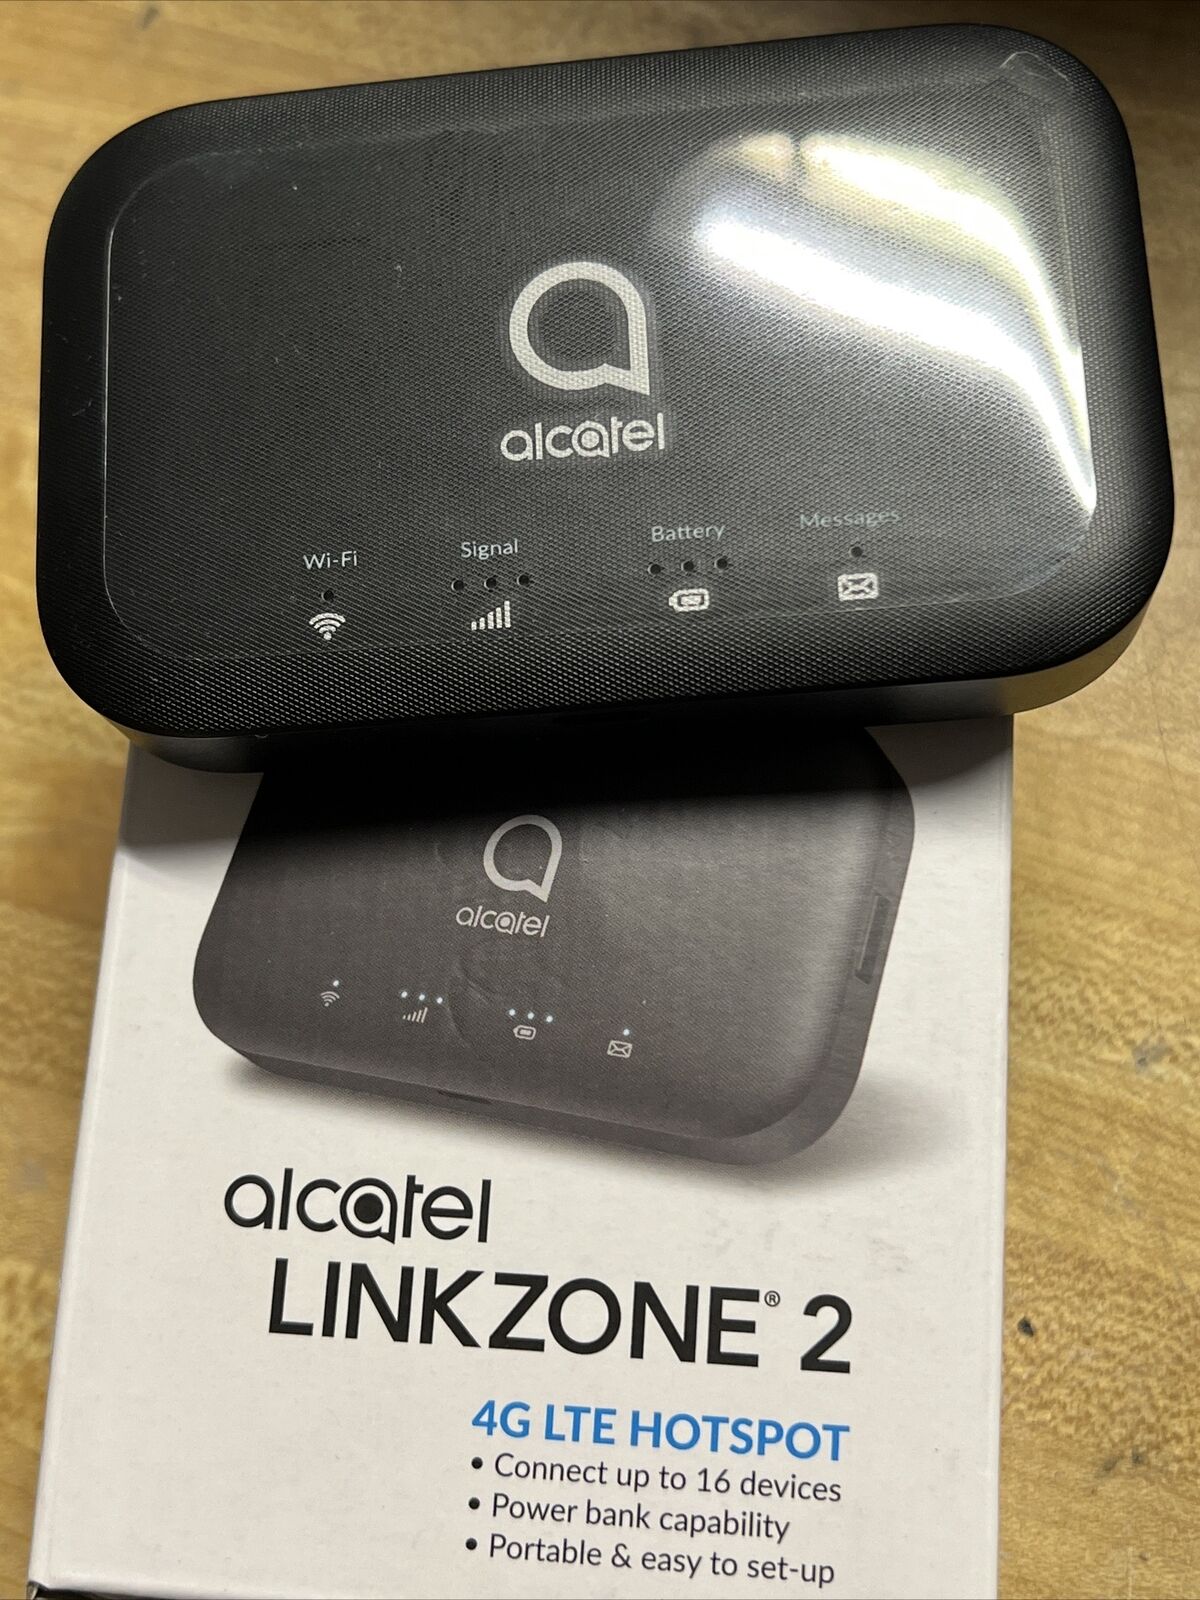 Mint A+ Alcatel Linkzone 2 MW43TM Mobile WiFi Hotspot 4G LTE (T-Mobile)